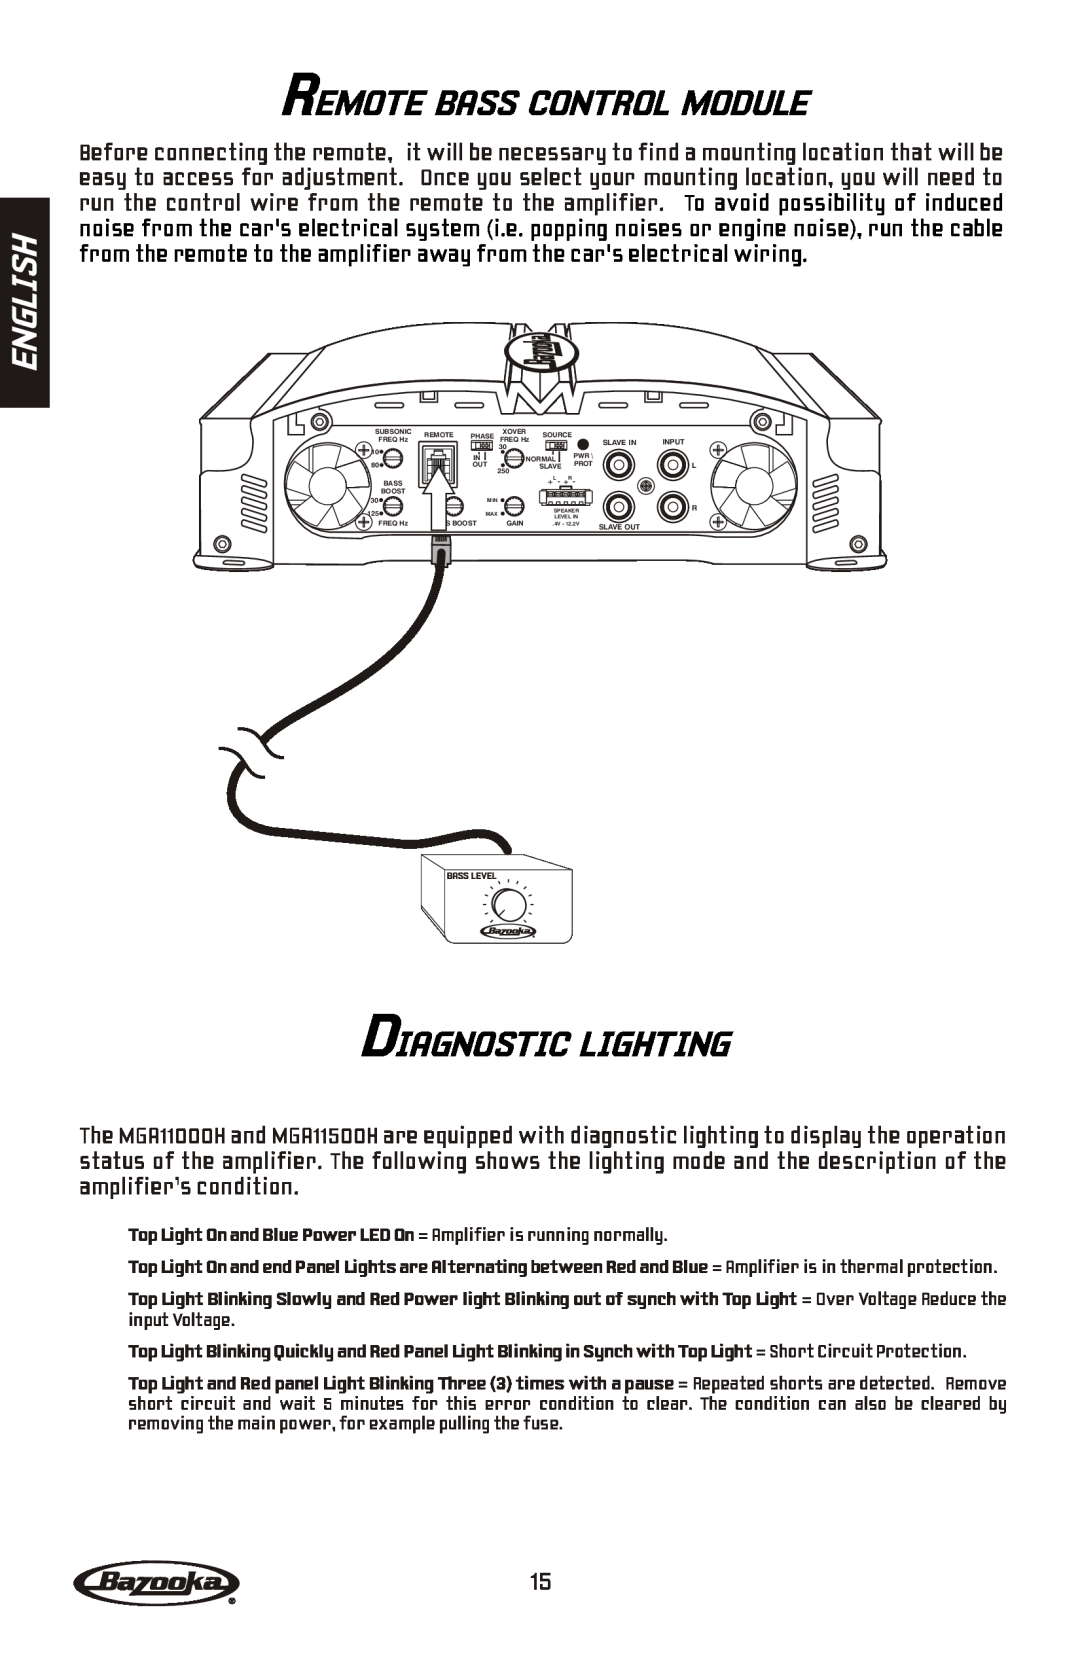 Bazooka MGA11500H, MGA11000H manual Remote Bass Control Module, Diagnostic Lighting, English 